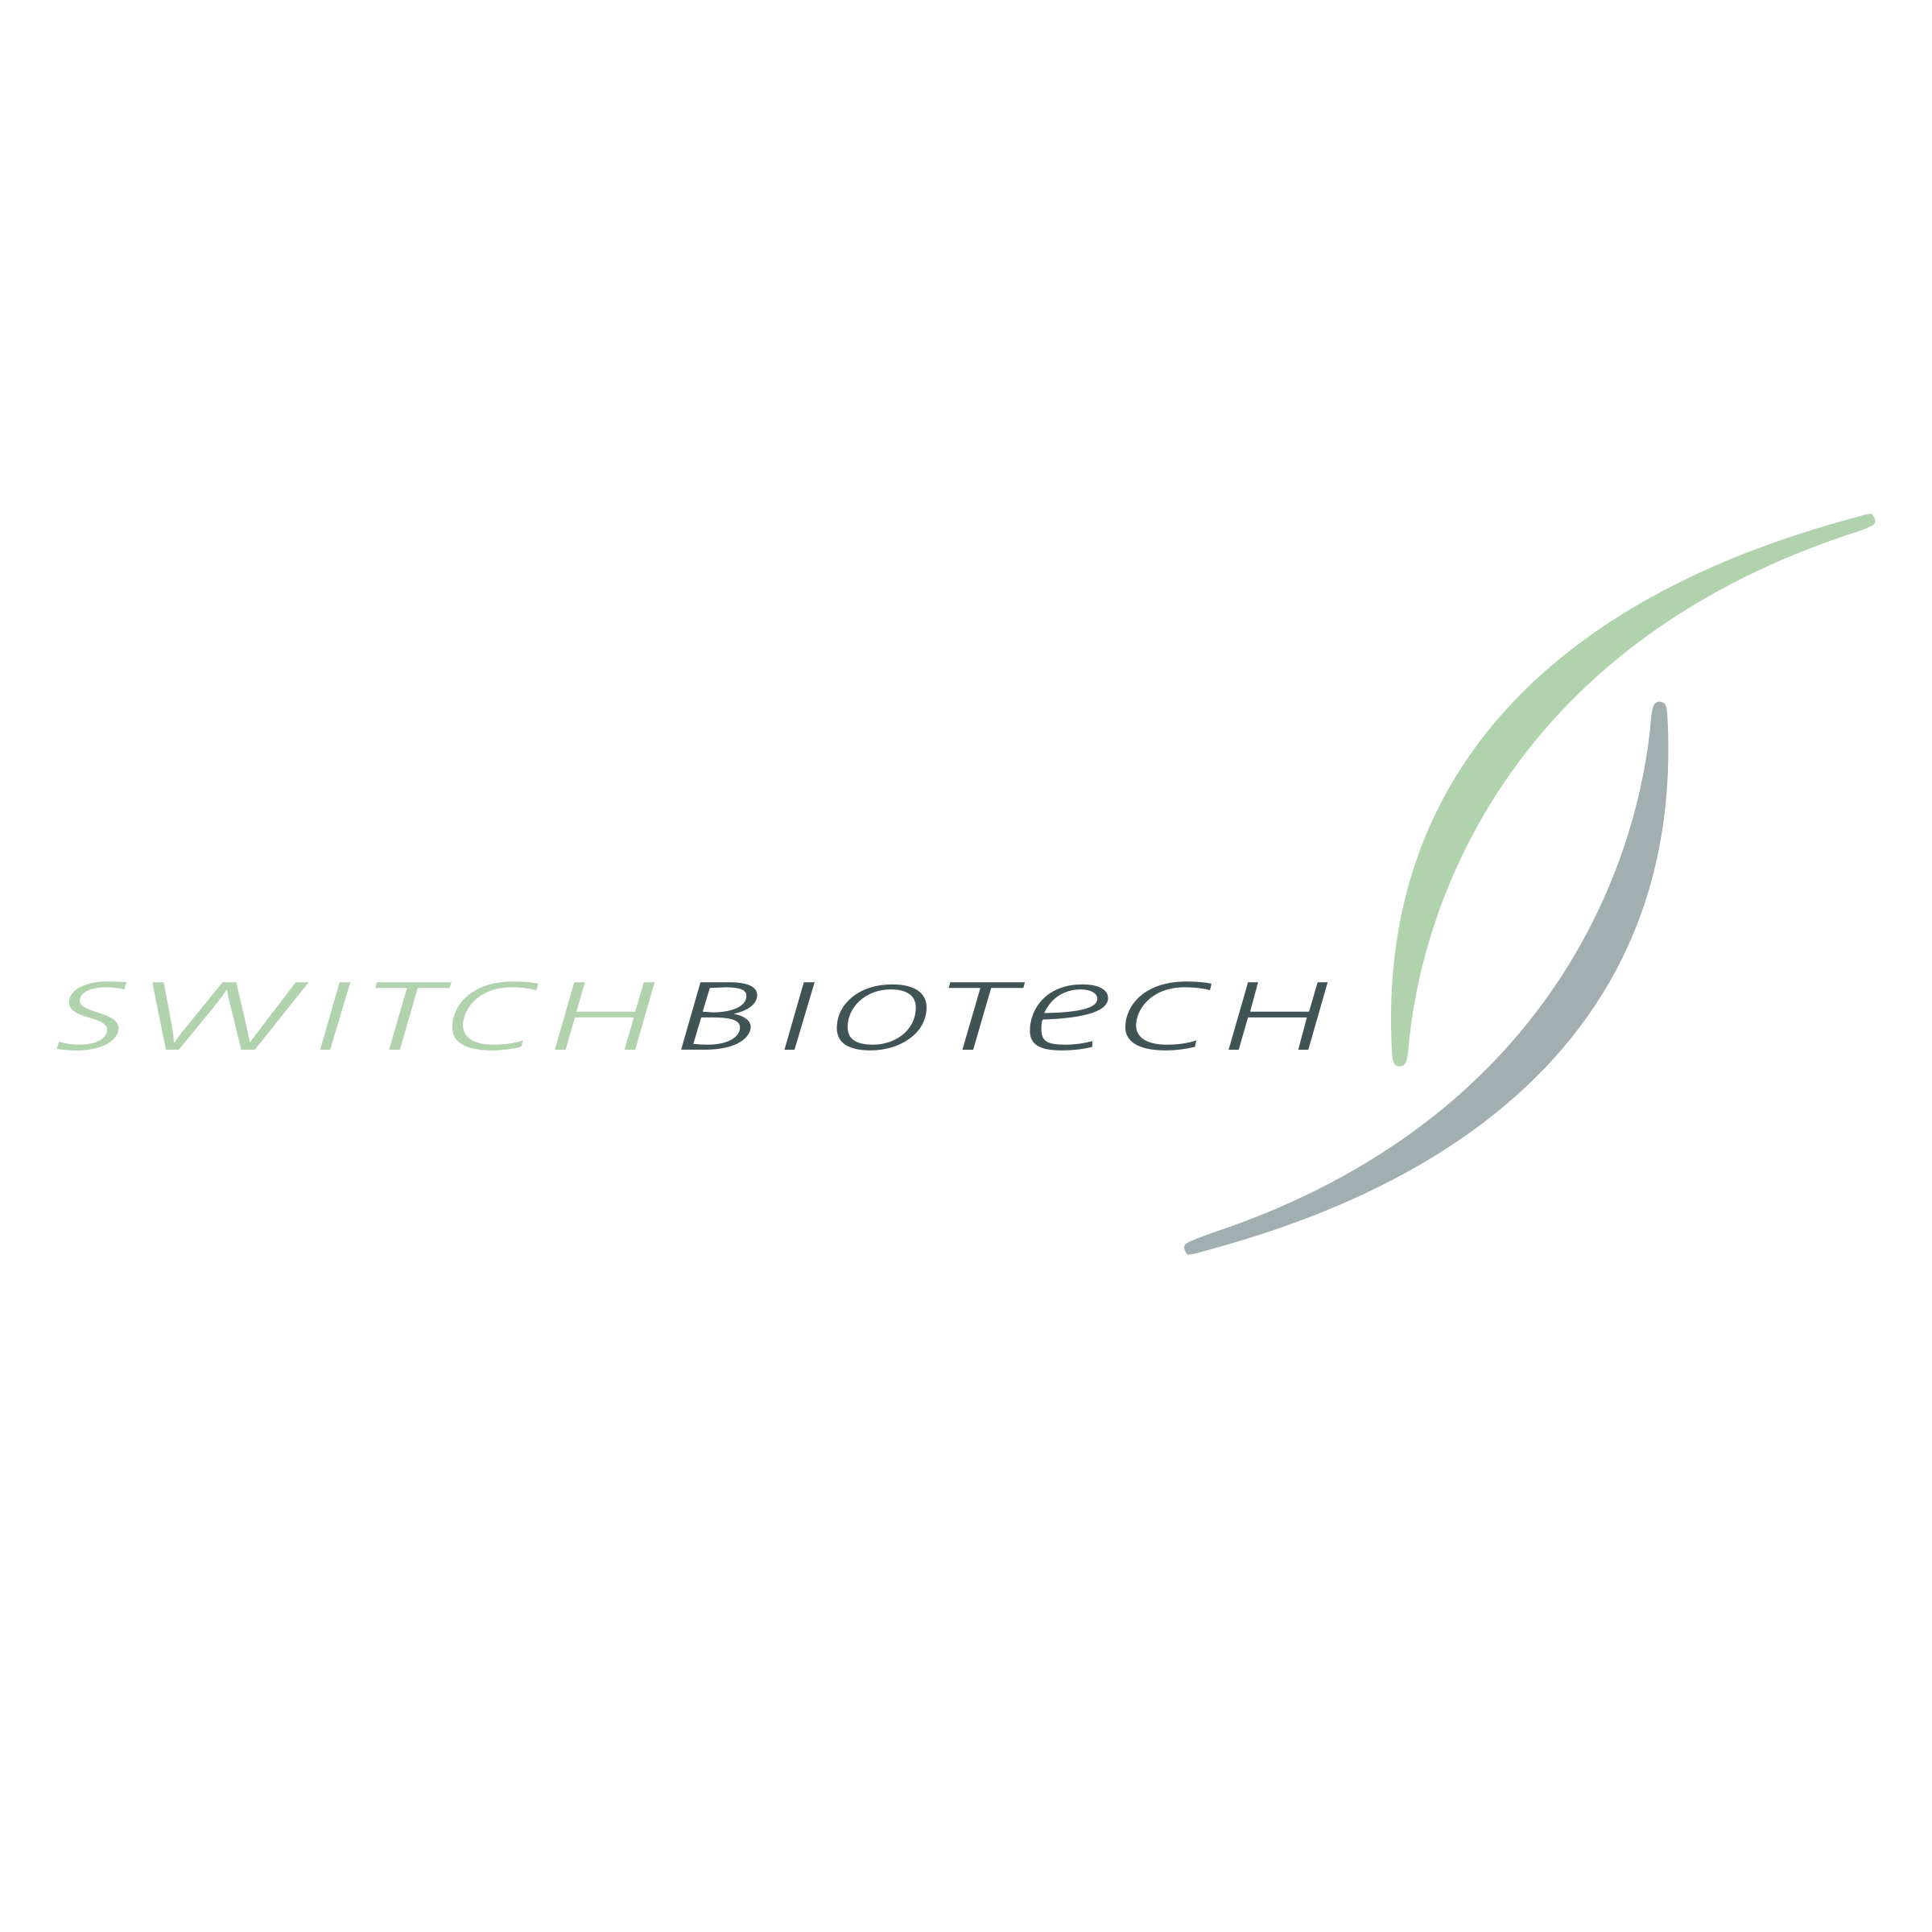 Switch Biotech Logo PNG Transparent & SVG Vector.